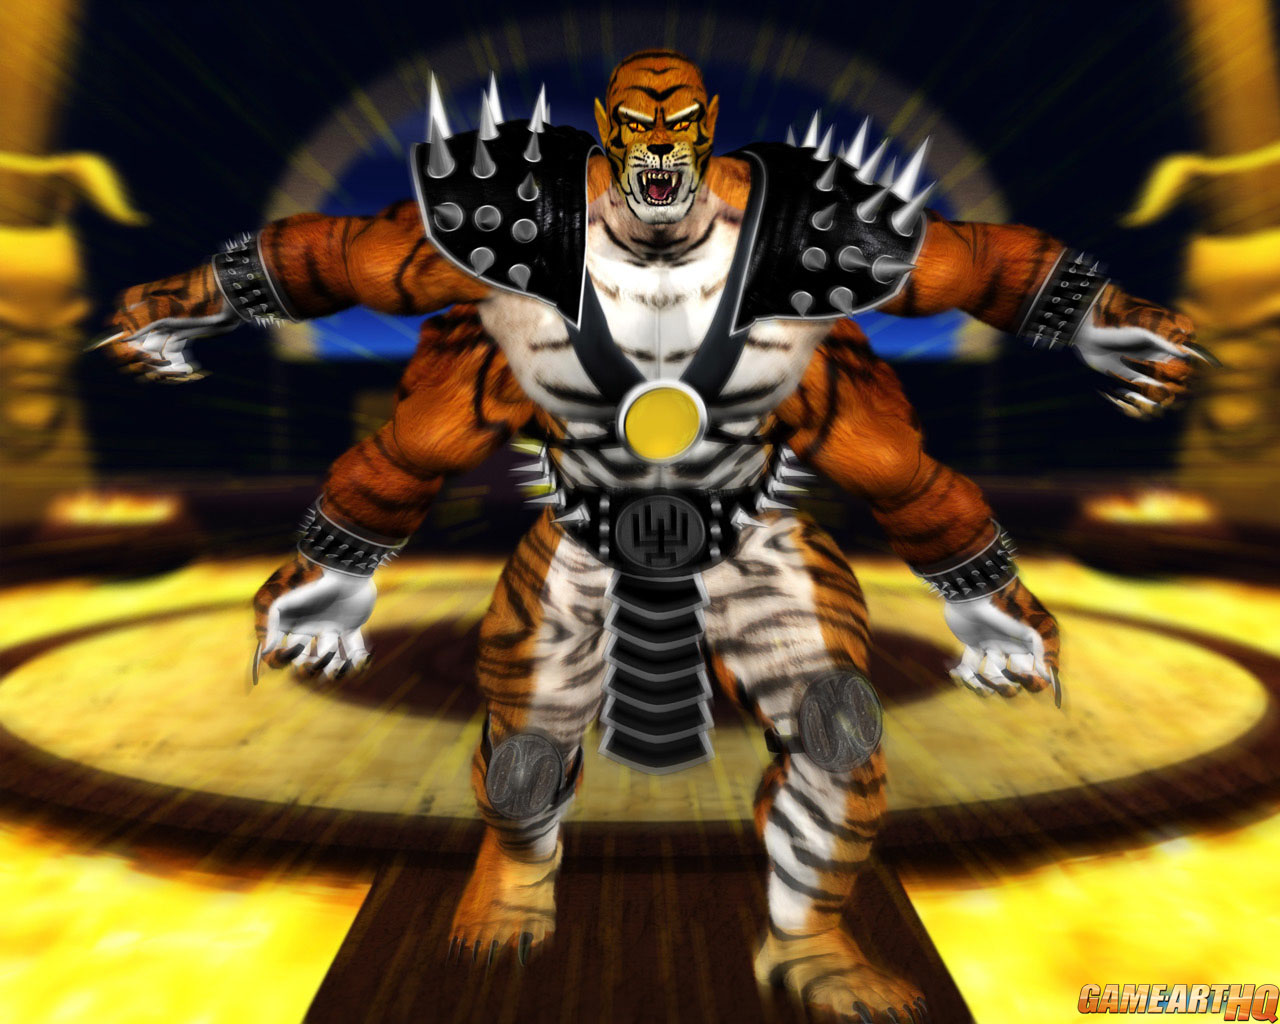 Kintaro from Mortal Kombat 2.